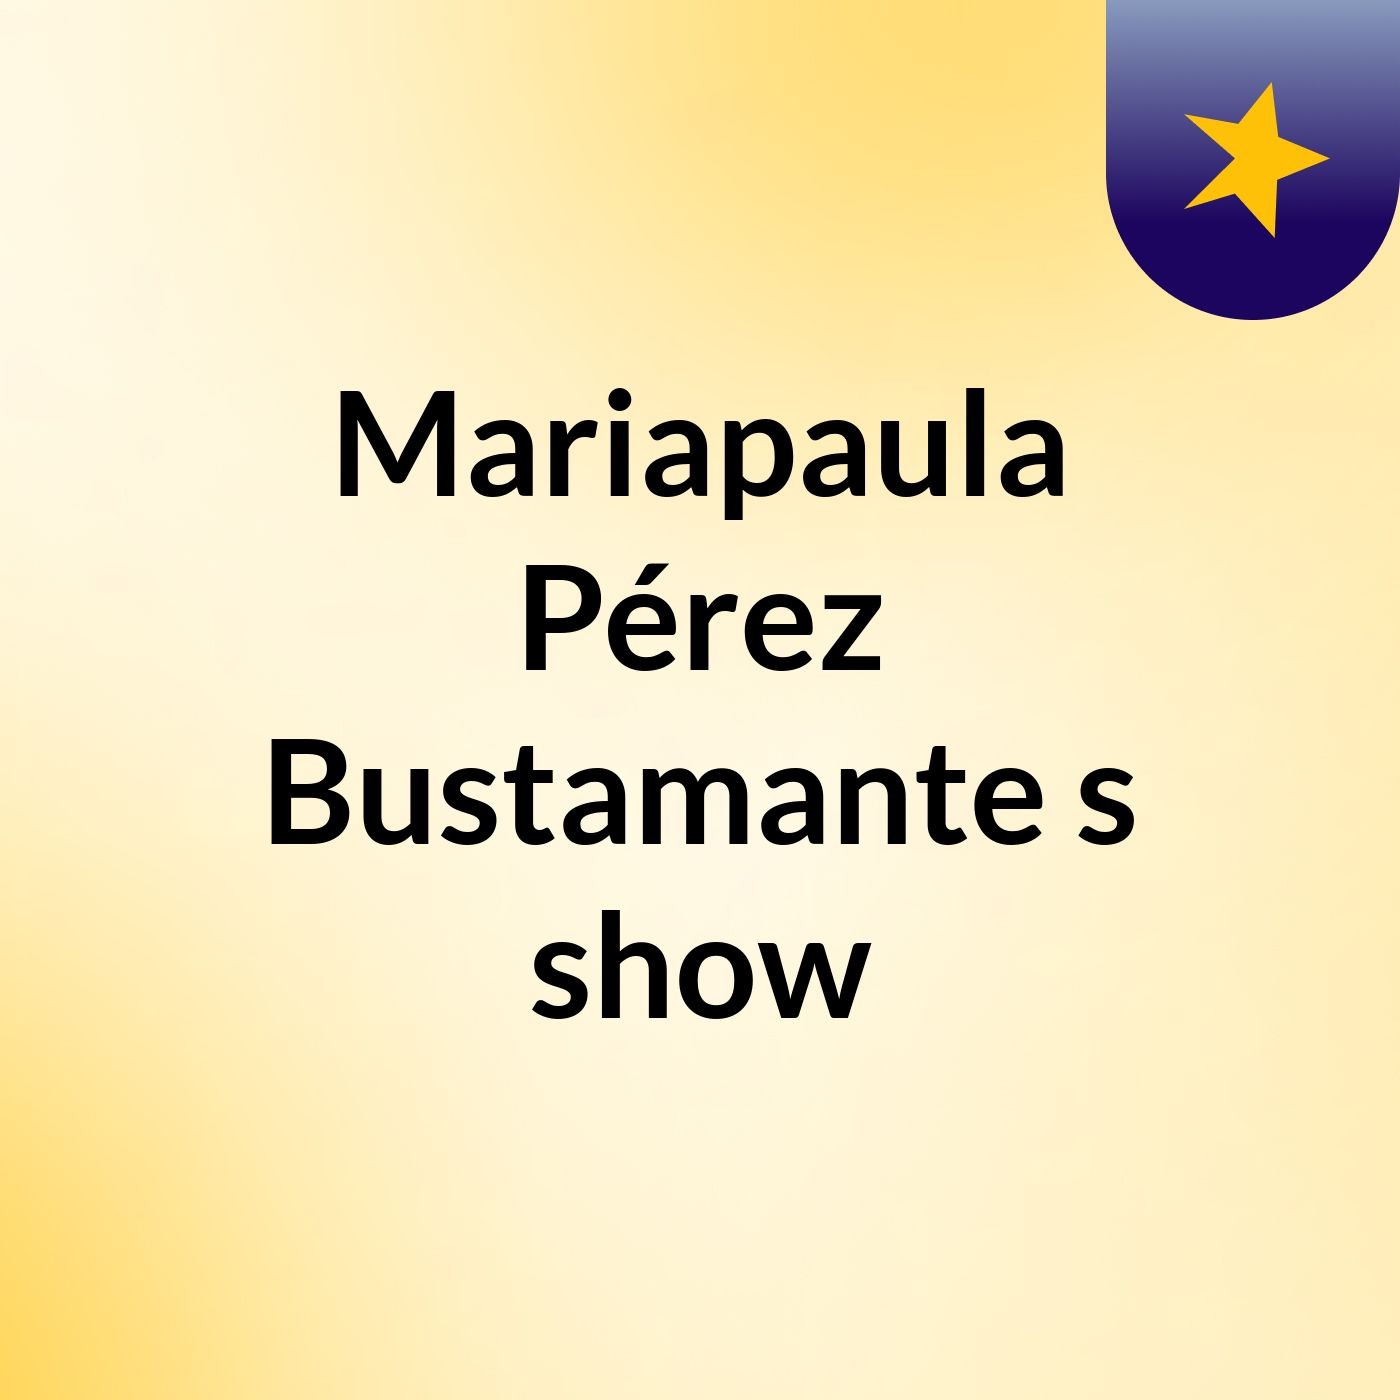 Mariapaula Pérez Bustamante's show